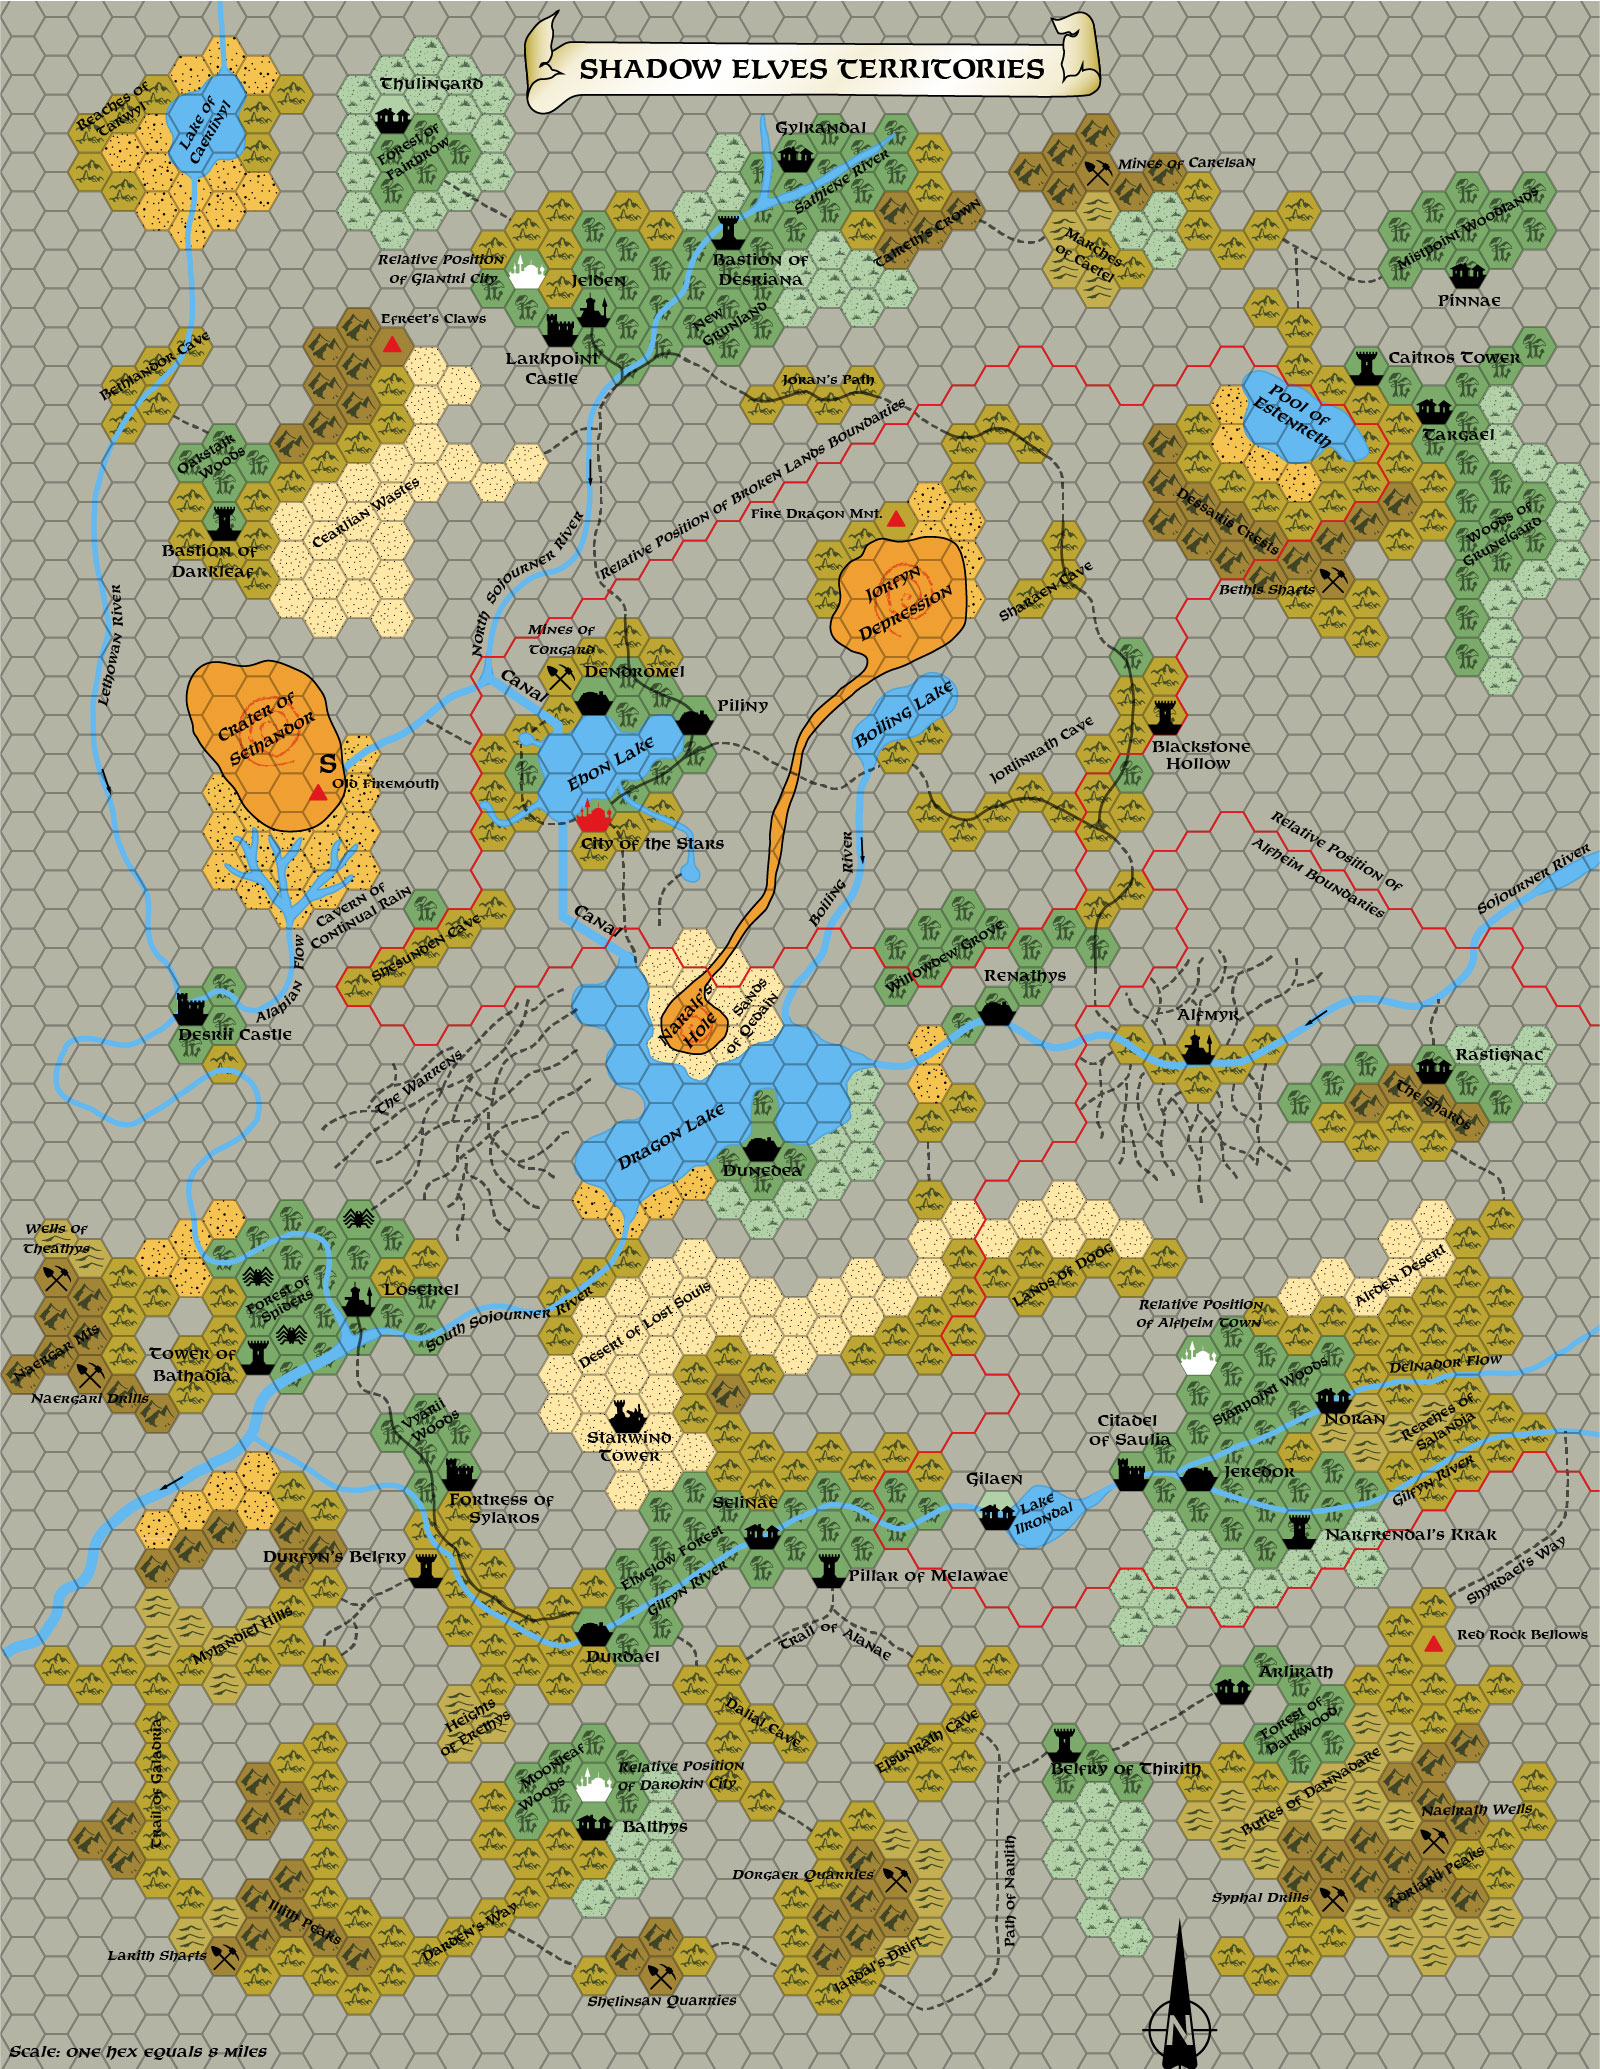 Replica of GAZ13 map of the Shadow Elves Territories, 8 miles per hex